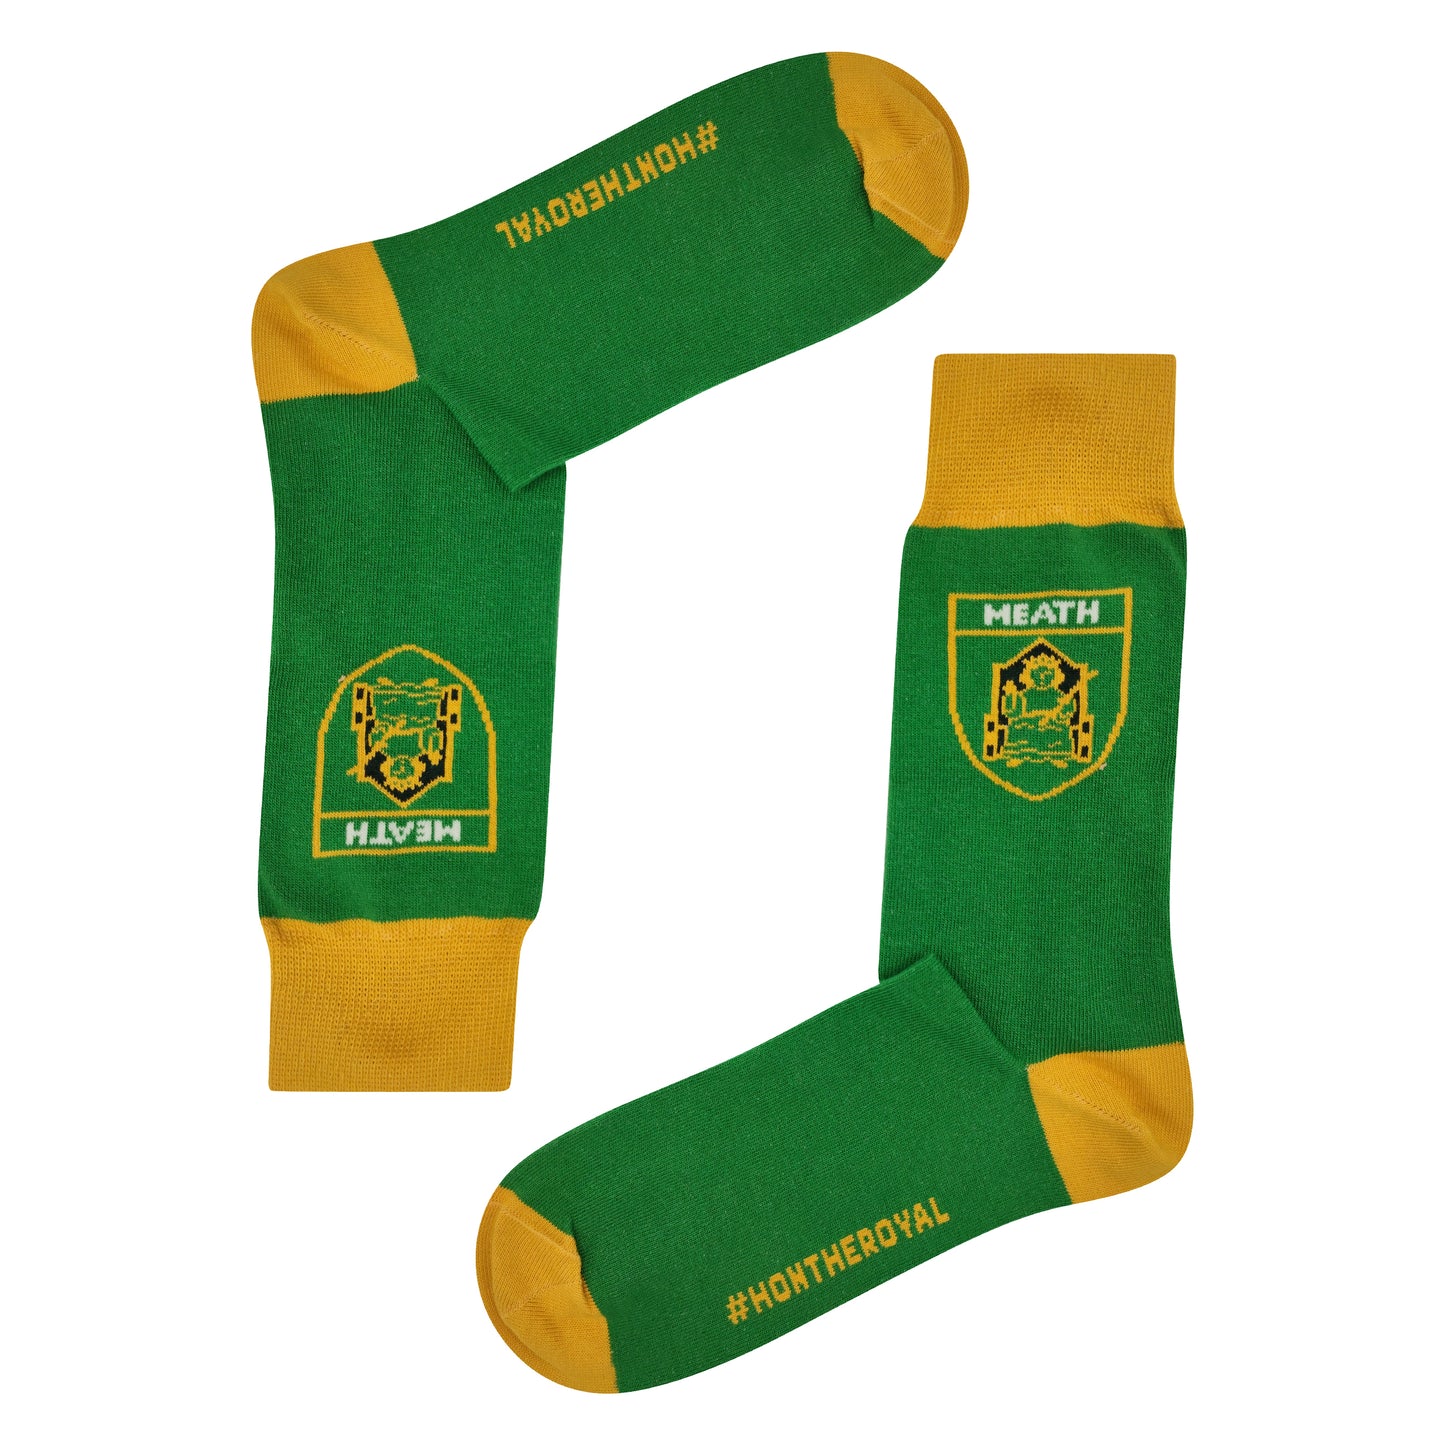 Meath Retro Sock Gift Box | Size UK 7 - 11